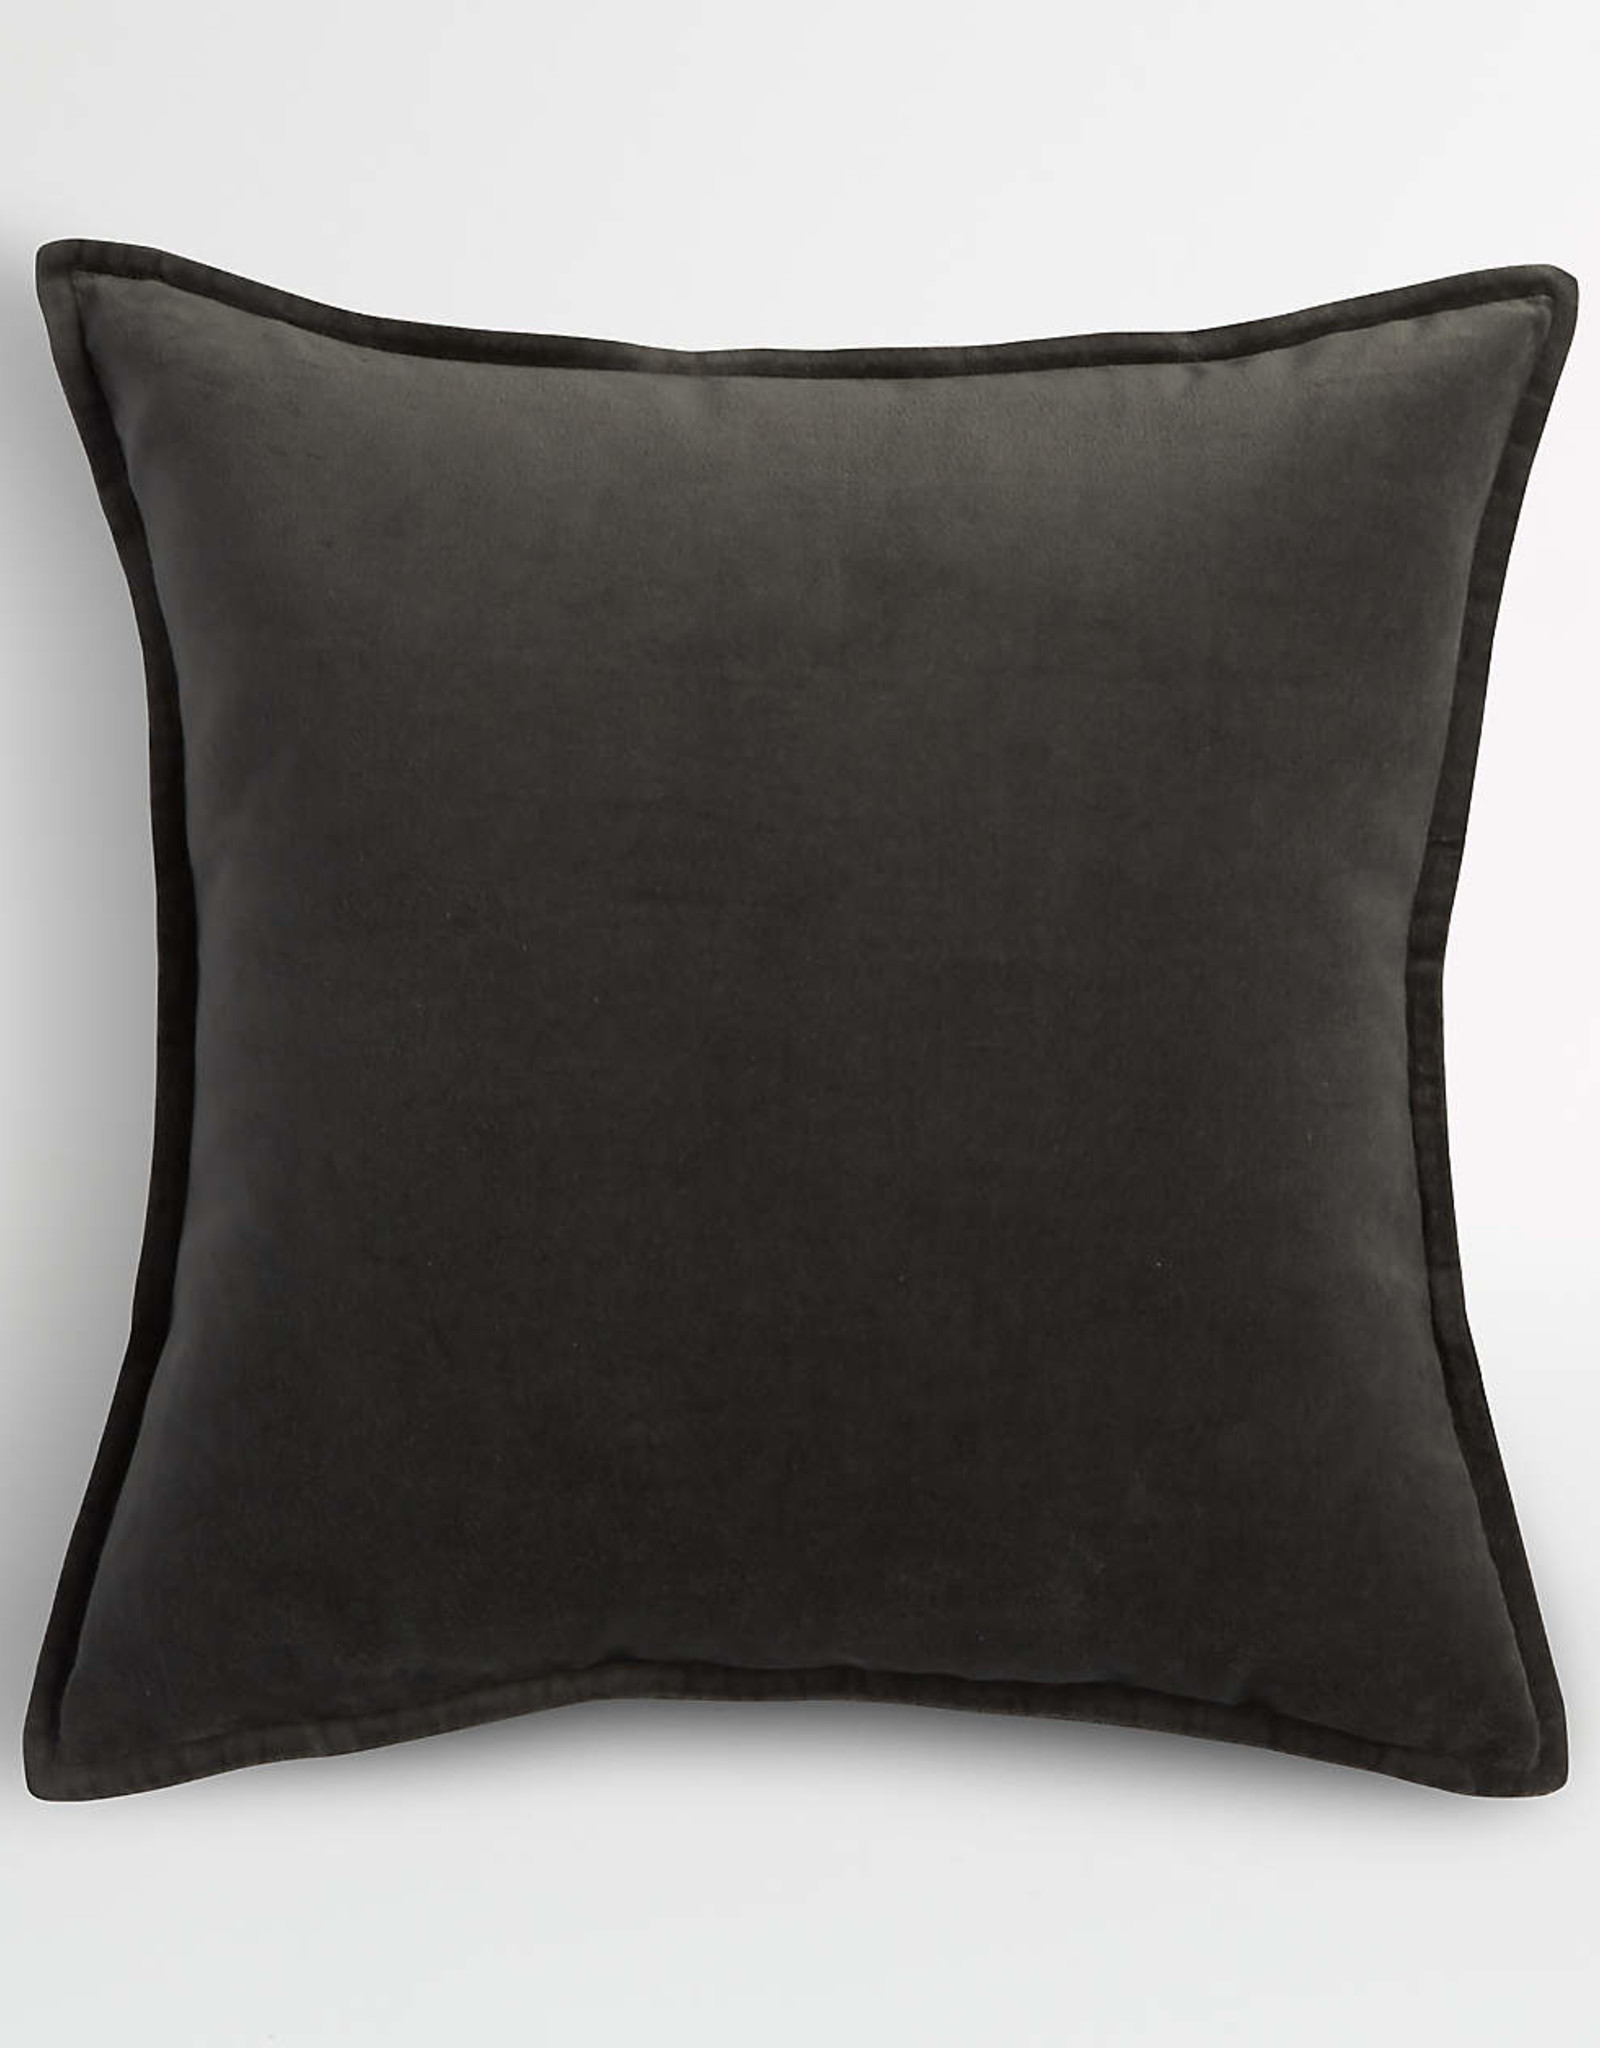 Daniadown Cushions Daniadown Dutch Velvet Rich Grey Toss 18 x 18